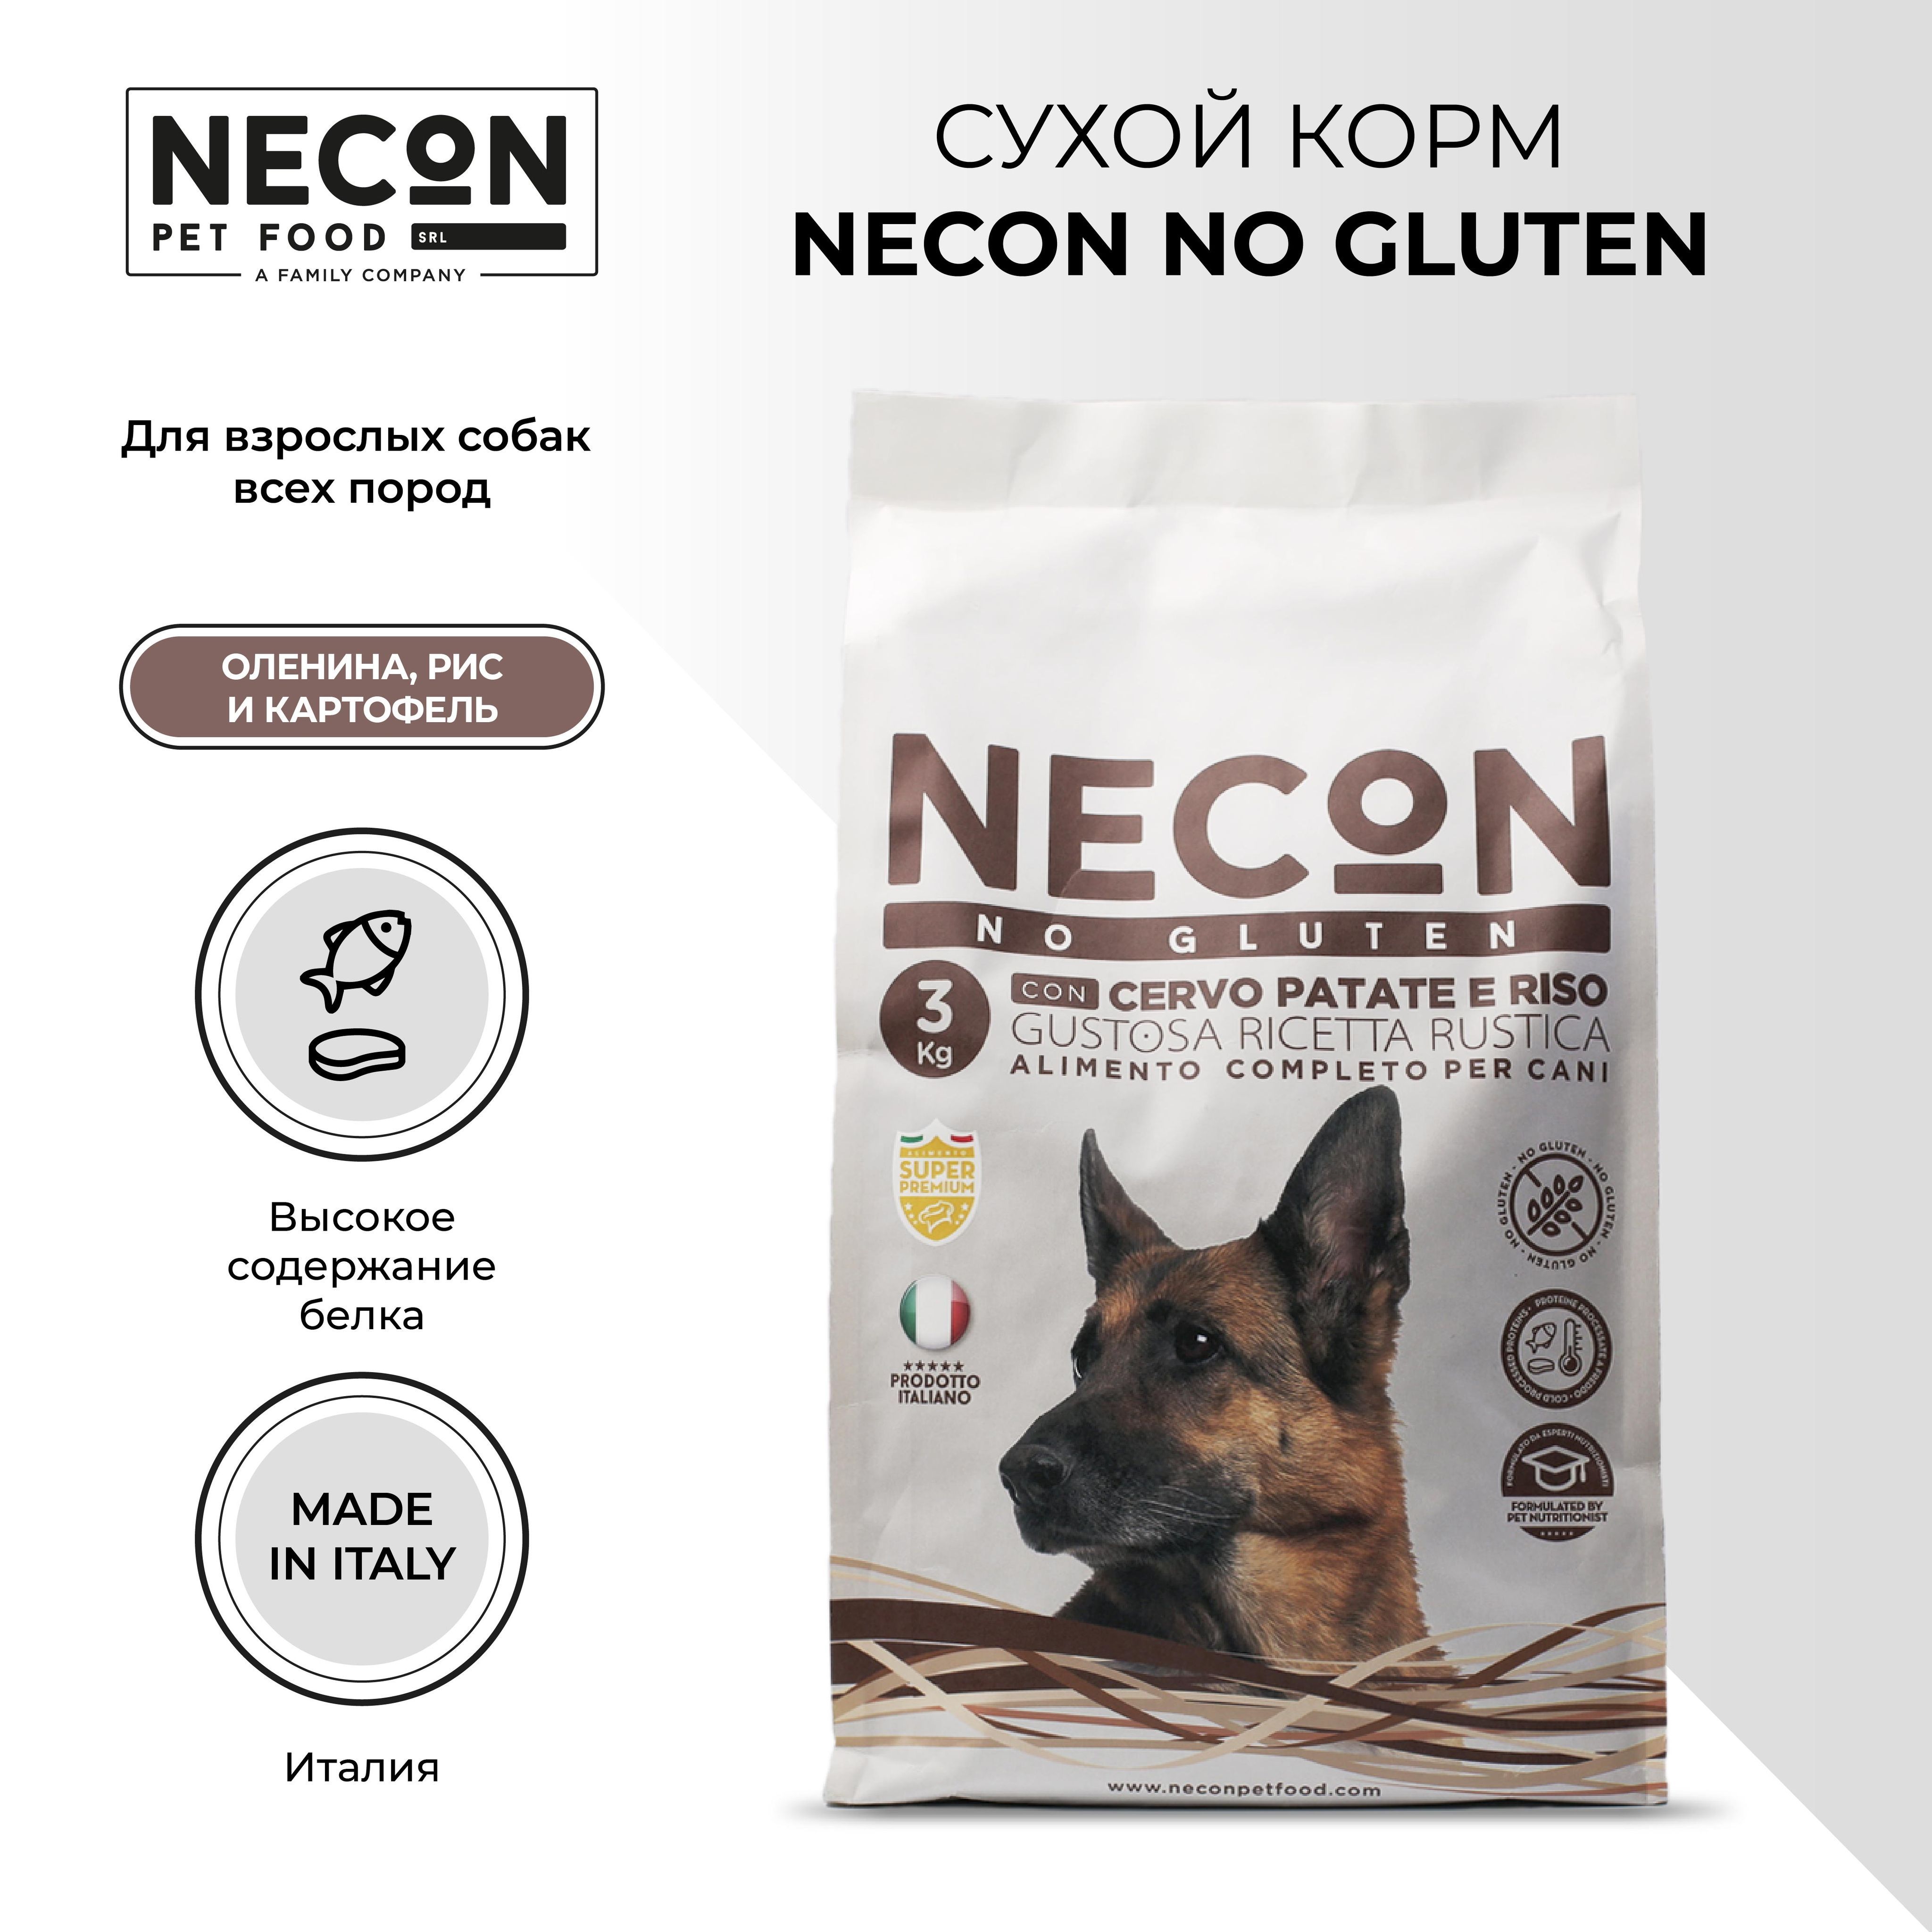 Сухой корм для собак Necon Zero Gluten Cervo Patate E Riso, оленина и картофель, 3 кг